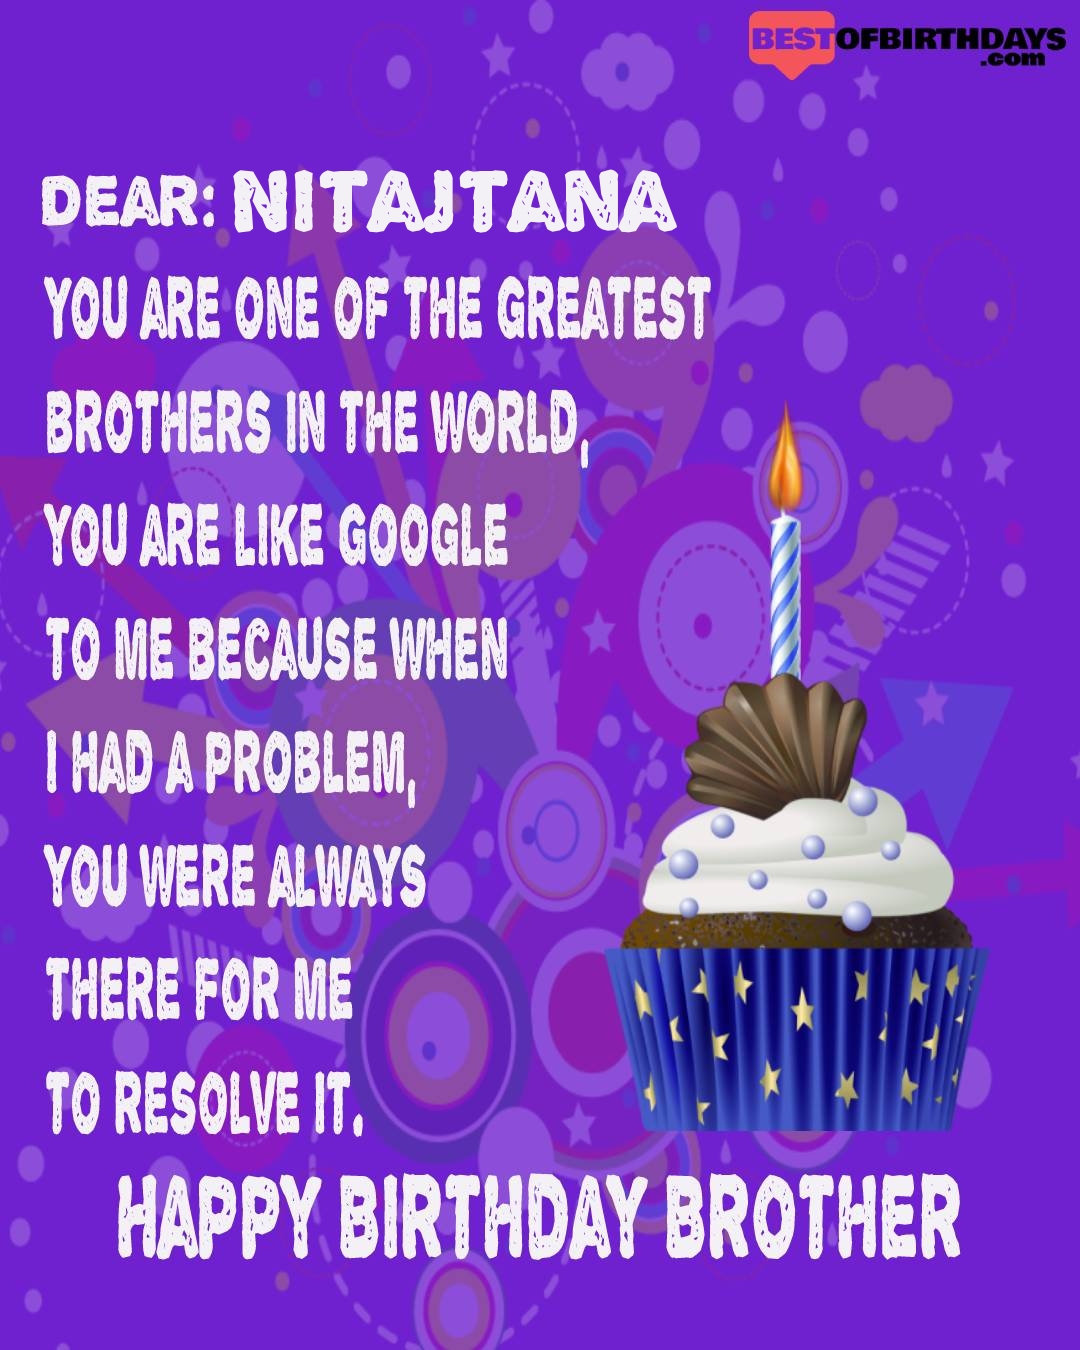 Happy birthday nitajtana bhai brother bro